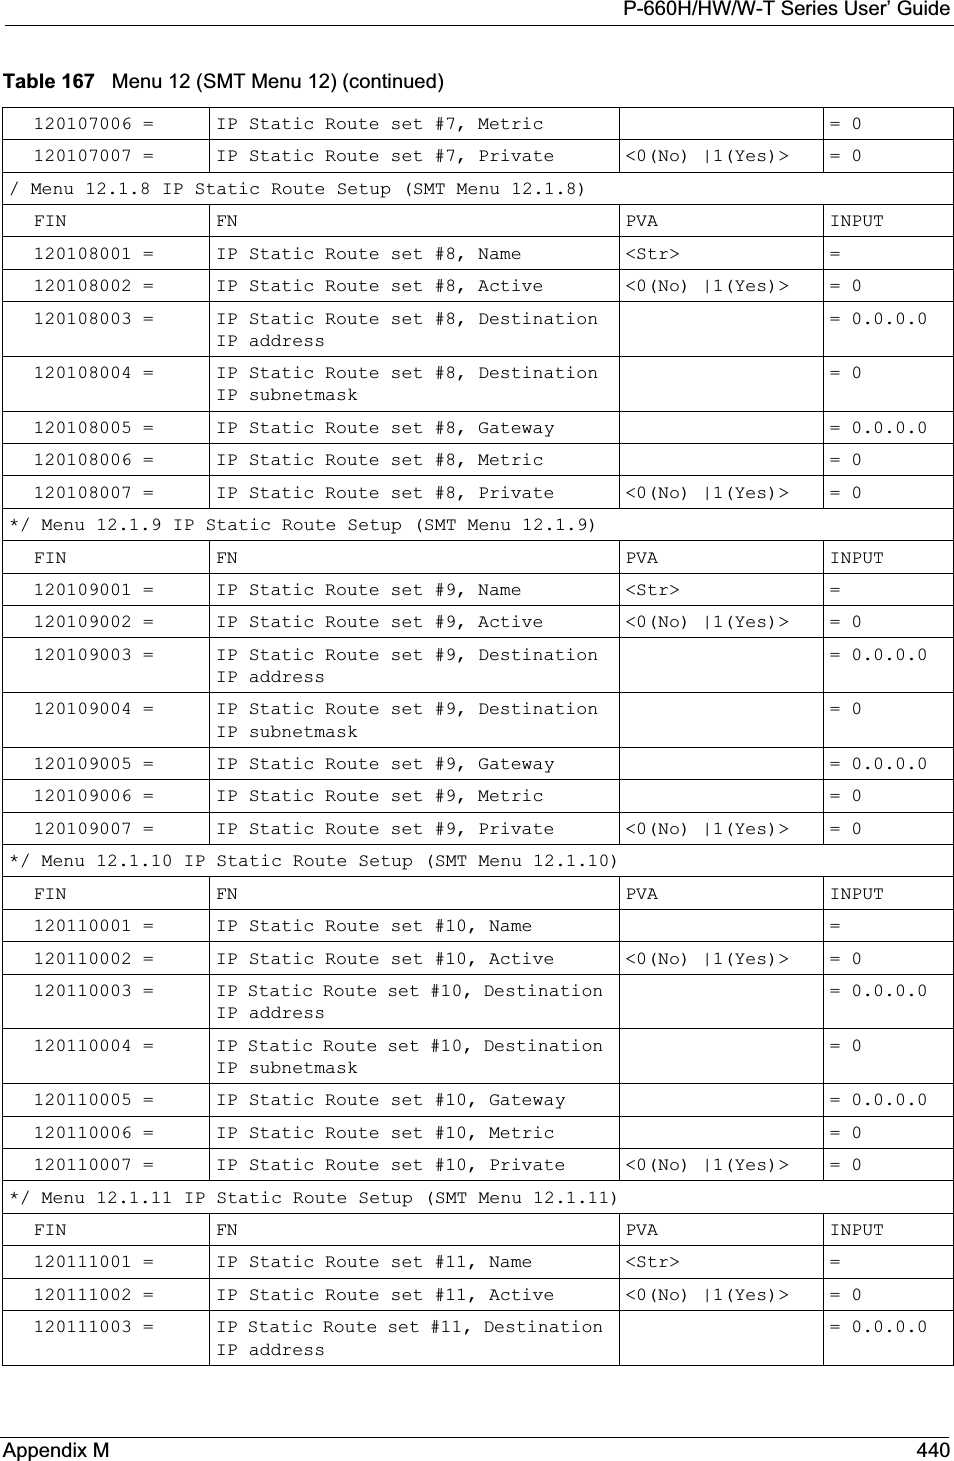 P-660H/HW/W-T Series User’ GuideAppendix M 440120107006 = IP Static Route set #7, Metric  = 0120107007 = IP Static Route set #7, Private &lt;0(No) |1(Yes)&gt;  = 0/ Menu 12.1.8 IP Static Route Setup (SMT Menu 12.1.8)FIN FN PVA INPUT120108001 = IP Static Route set #8, Name &lt;Str&gt; =120108002 = IP Static Route set #8, Active  &lt;0(No) |1(Yes)&gt;  = 0120108003 = IP Static Route set #8, Destination IP address = 0.0.0.0120108004 = IP Static Route set #8, Destination IP subnetmask = 0120108005 = IP Static Route set #8, Gateway  = 0.0.0.0120108006 = IP Static Route set #8, Metric  = 0120108007 = IP Static Route set #8, Private &lt;0(No) |1(Yes)&gt; = 0*/ Menu 12.1.9 IP Static Route Setup (SMT Menu 12.1.9)FIN FN PVA INPUT120109001 = IP Static Route set #9, Name  &lt;Str&gt; =120109002 = IP Static Route set #9, Active &lt;0(No) |1(Yes)&gt;  = 0120109003 = IP Static Route set #9, Destination IP address = 0.0.0.0120109004 = IP Static Route set #9, Destination IP subnetmask = 0120109005 = IP Static Route set #9, Gateway  = 0.0.0.0120109006 = IP Static Route set #9, Metric  = 0120109007 = IP Static Route set #9, Private &lt;0(No) |1(Yes)&gt;  = 0*/ Menu 12.1.10 IP Static Route Setup (SMT Menu 12.1.10)FIN FN PVA INPUT120110001 = IP Static Route set #10, Name  =120110002 = IP Static Route set #10, Active &lt;0(No) |1(Yes)&gt;  = 0120110003 = IP Static Route set #10, Destination IP address = 0.0.0.0120110004 = IP Static Route set #10, Destination IP subnetmask = 0120110005 = IP Static Route set #10, Gateway  = 0.0.0.0120110006 = IP Static Route set #10, Metric  = 0120110007 = IP Static Route set #10, Private &lt;0(No) |1(Yes)&gt;  = 0*/ Menu 12.1.11 IP Static Route Setup (SMT Menu 12.1.11)FIN FN PVA INPUT120111001 = IP Static Route set #11, Name  &lt;Str&gt; =120111002 = IP Static Route set #11, Active  &lt;0(No) |1(Yes)&gt;  = 0120111003 = IP Static Route set #11, Destination IP address = 0.0.0.0Table 167   Menu 12 (SMT Menu 12) (continued)